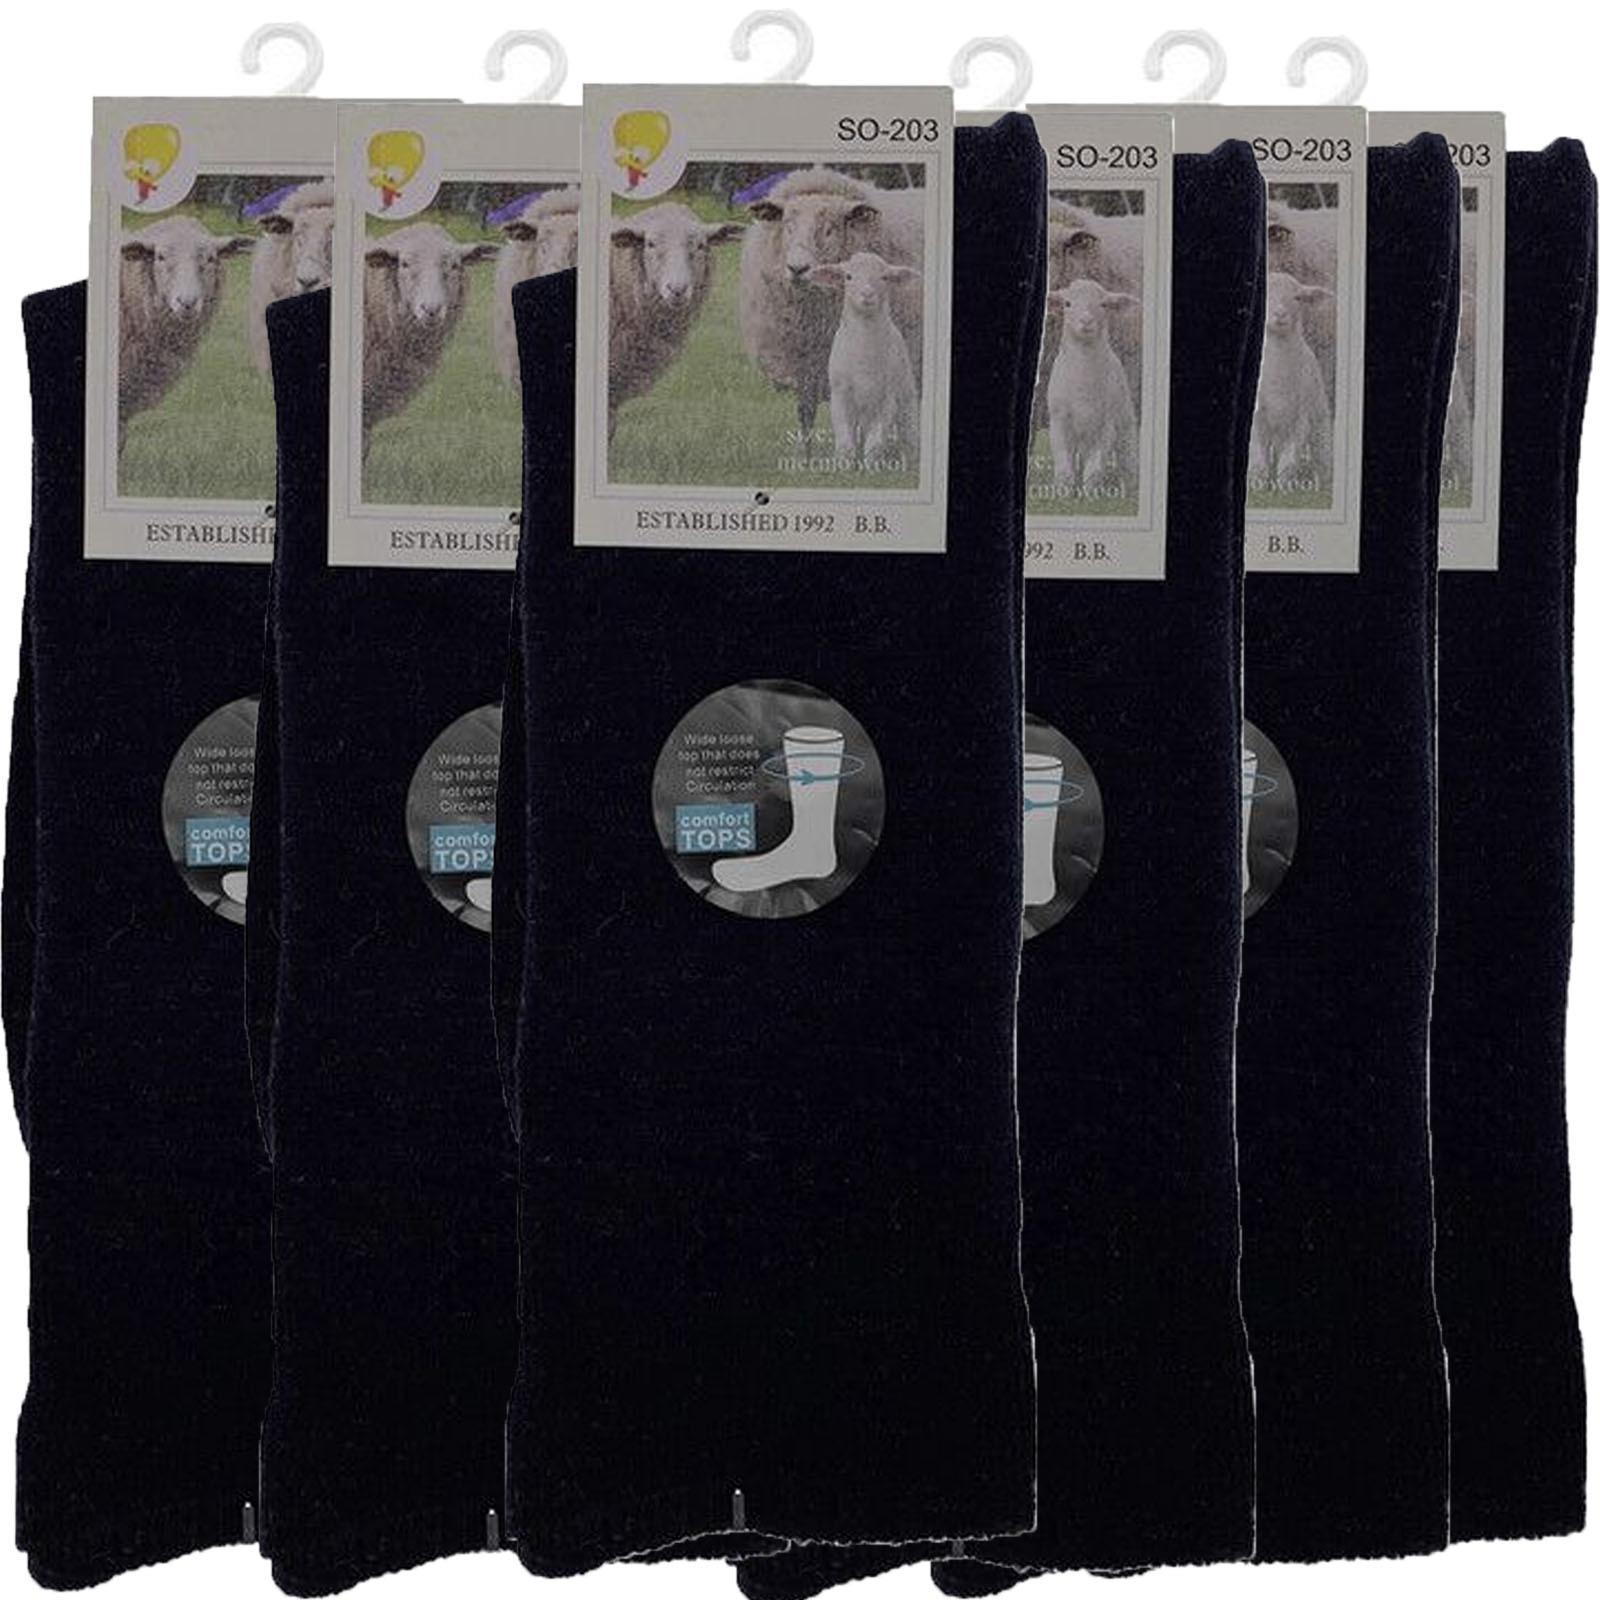 Merino Wool Mens Loose Top Thermal Socks Diabetic Comfort Circulation - 6 Pairs - Navy - 7-11